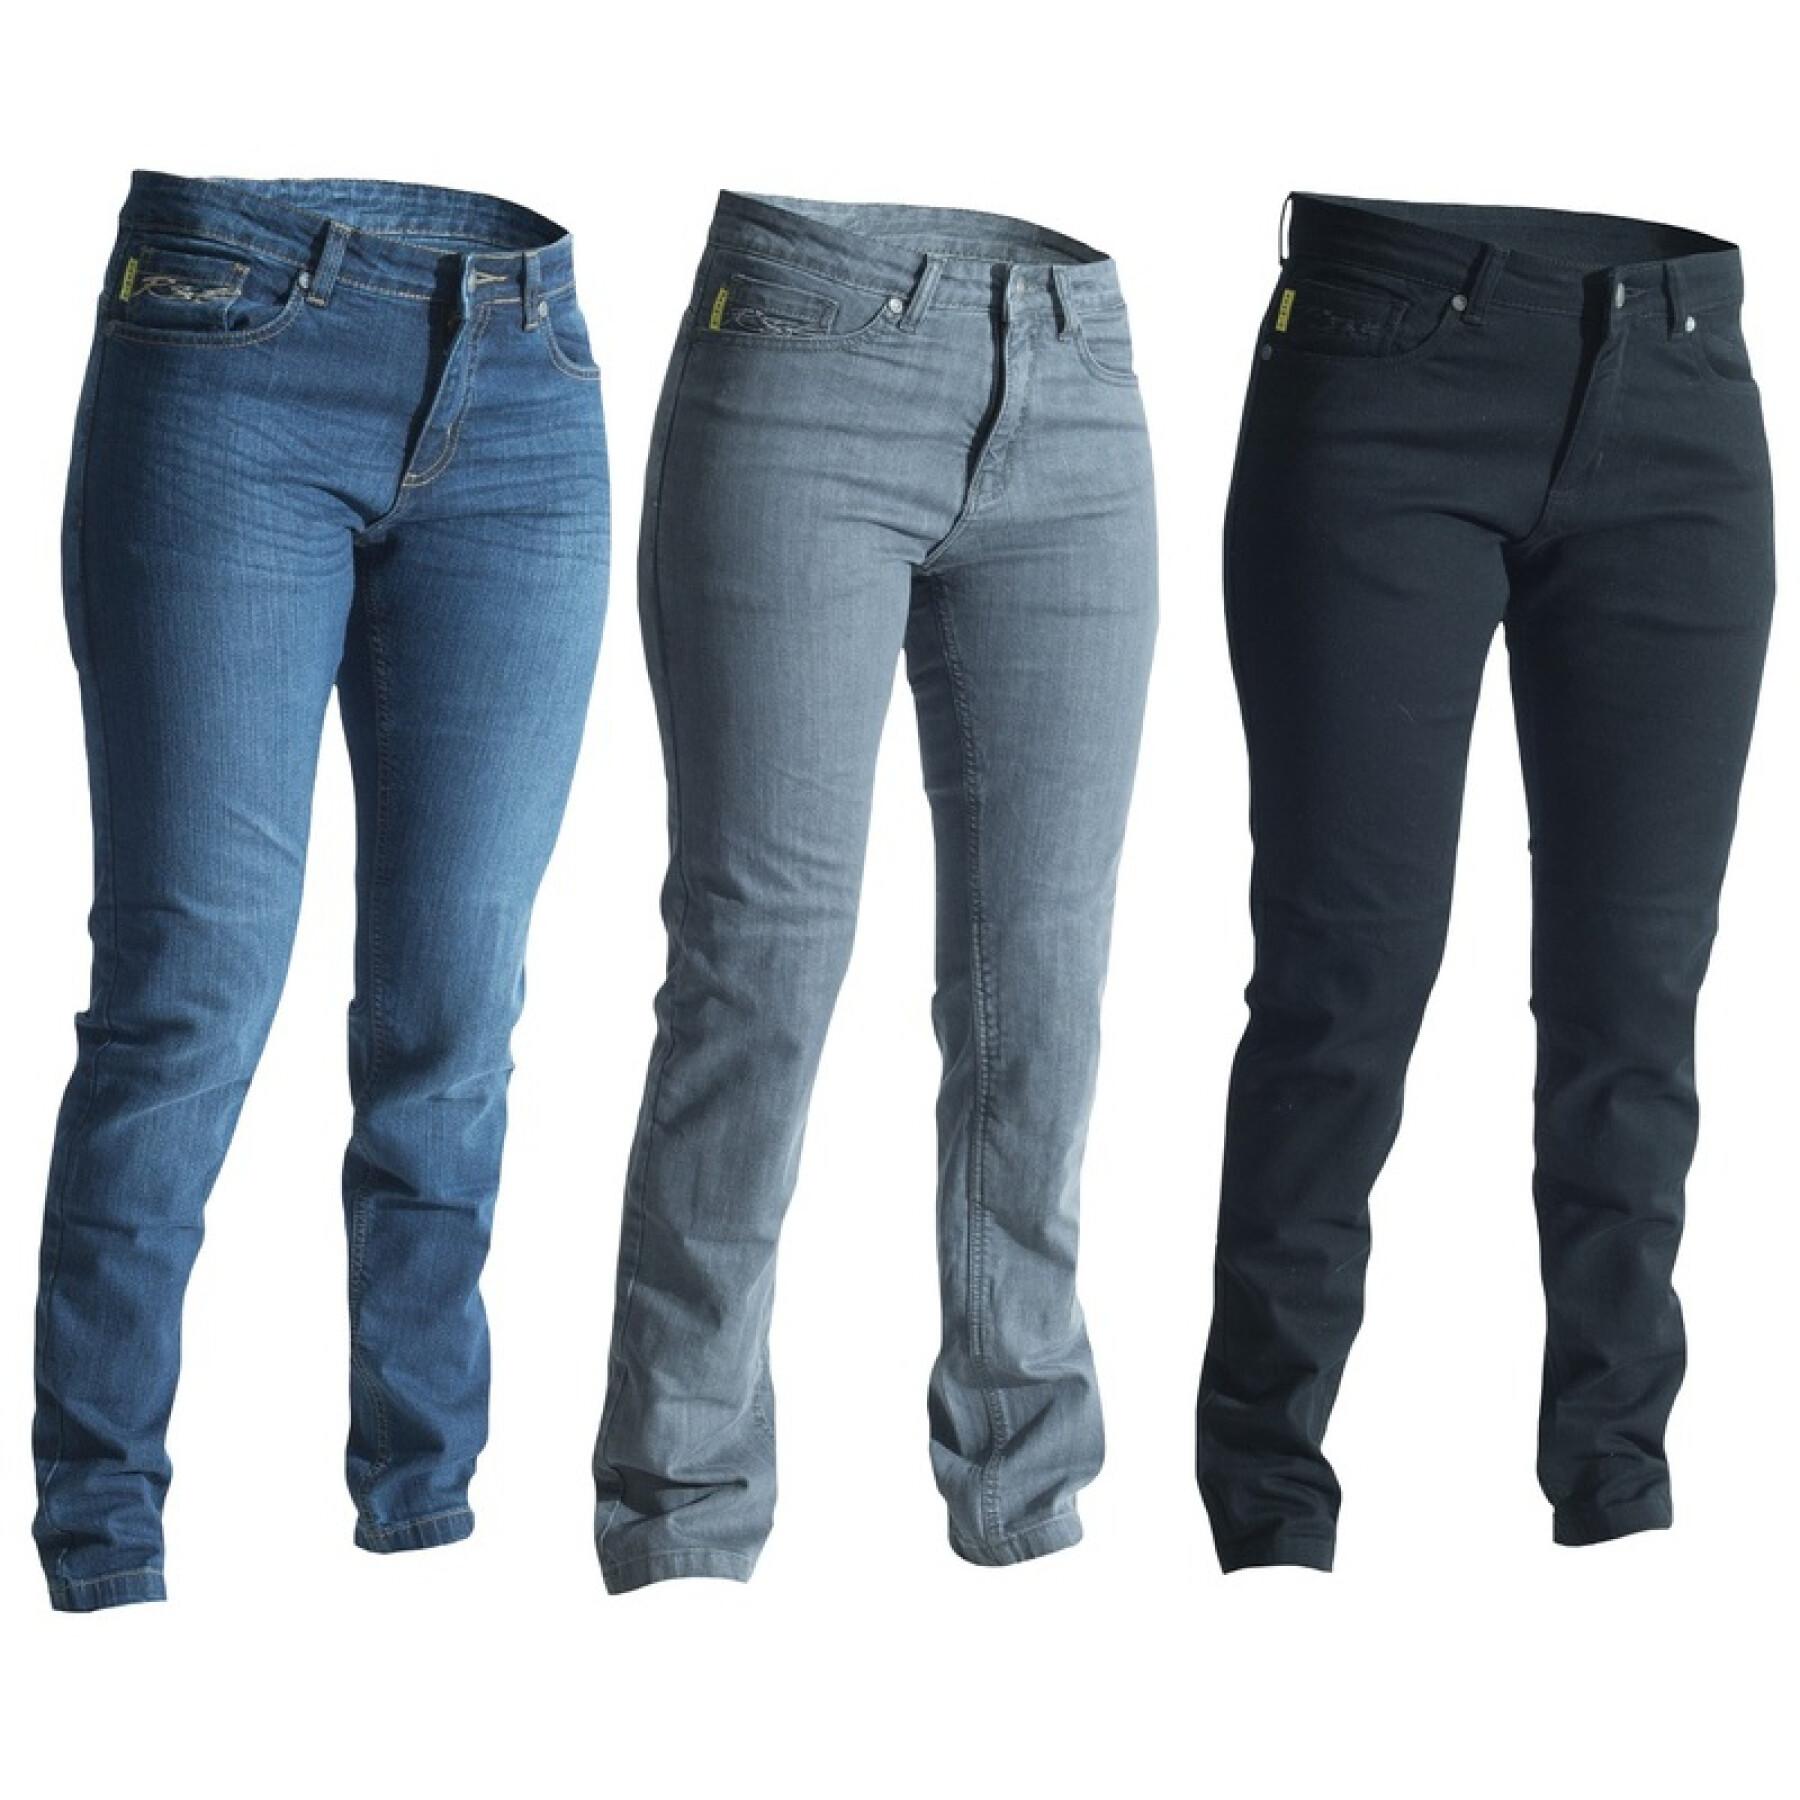 Dames skinny jeans RST Aramid